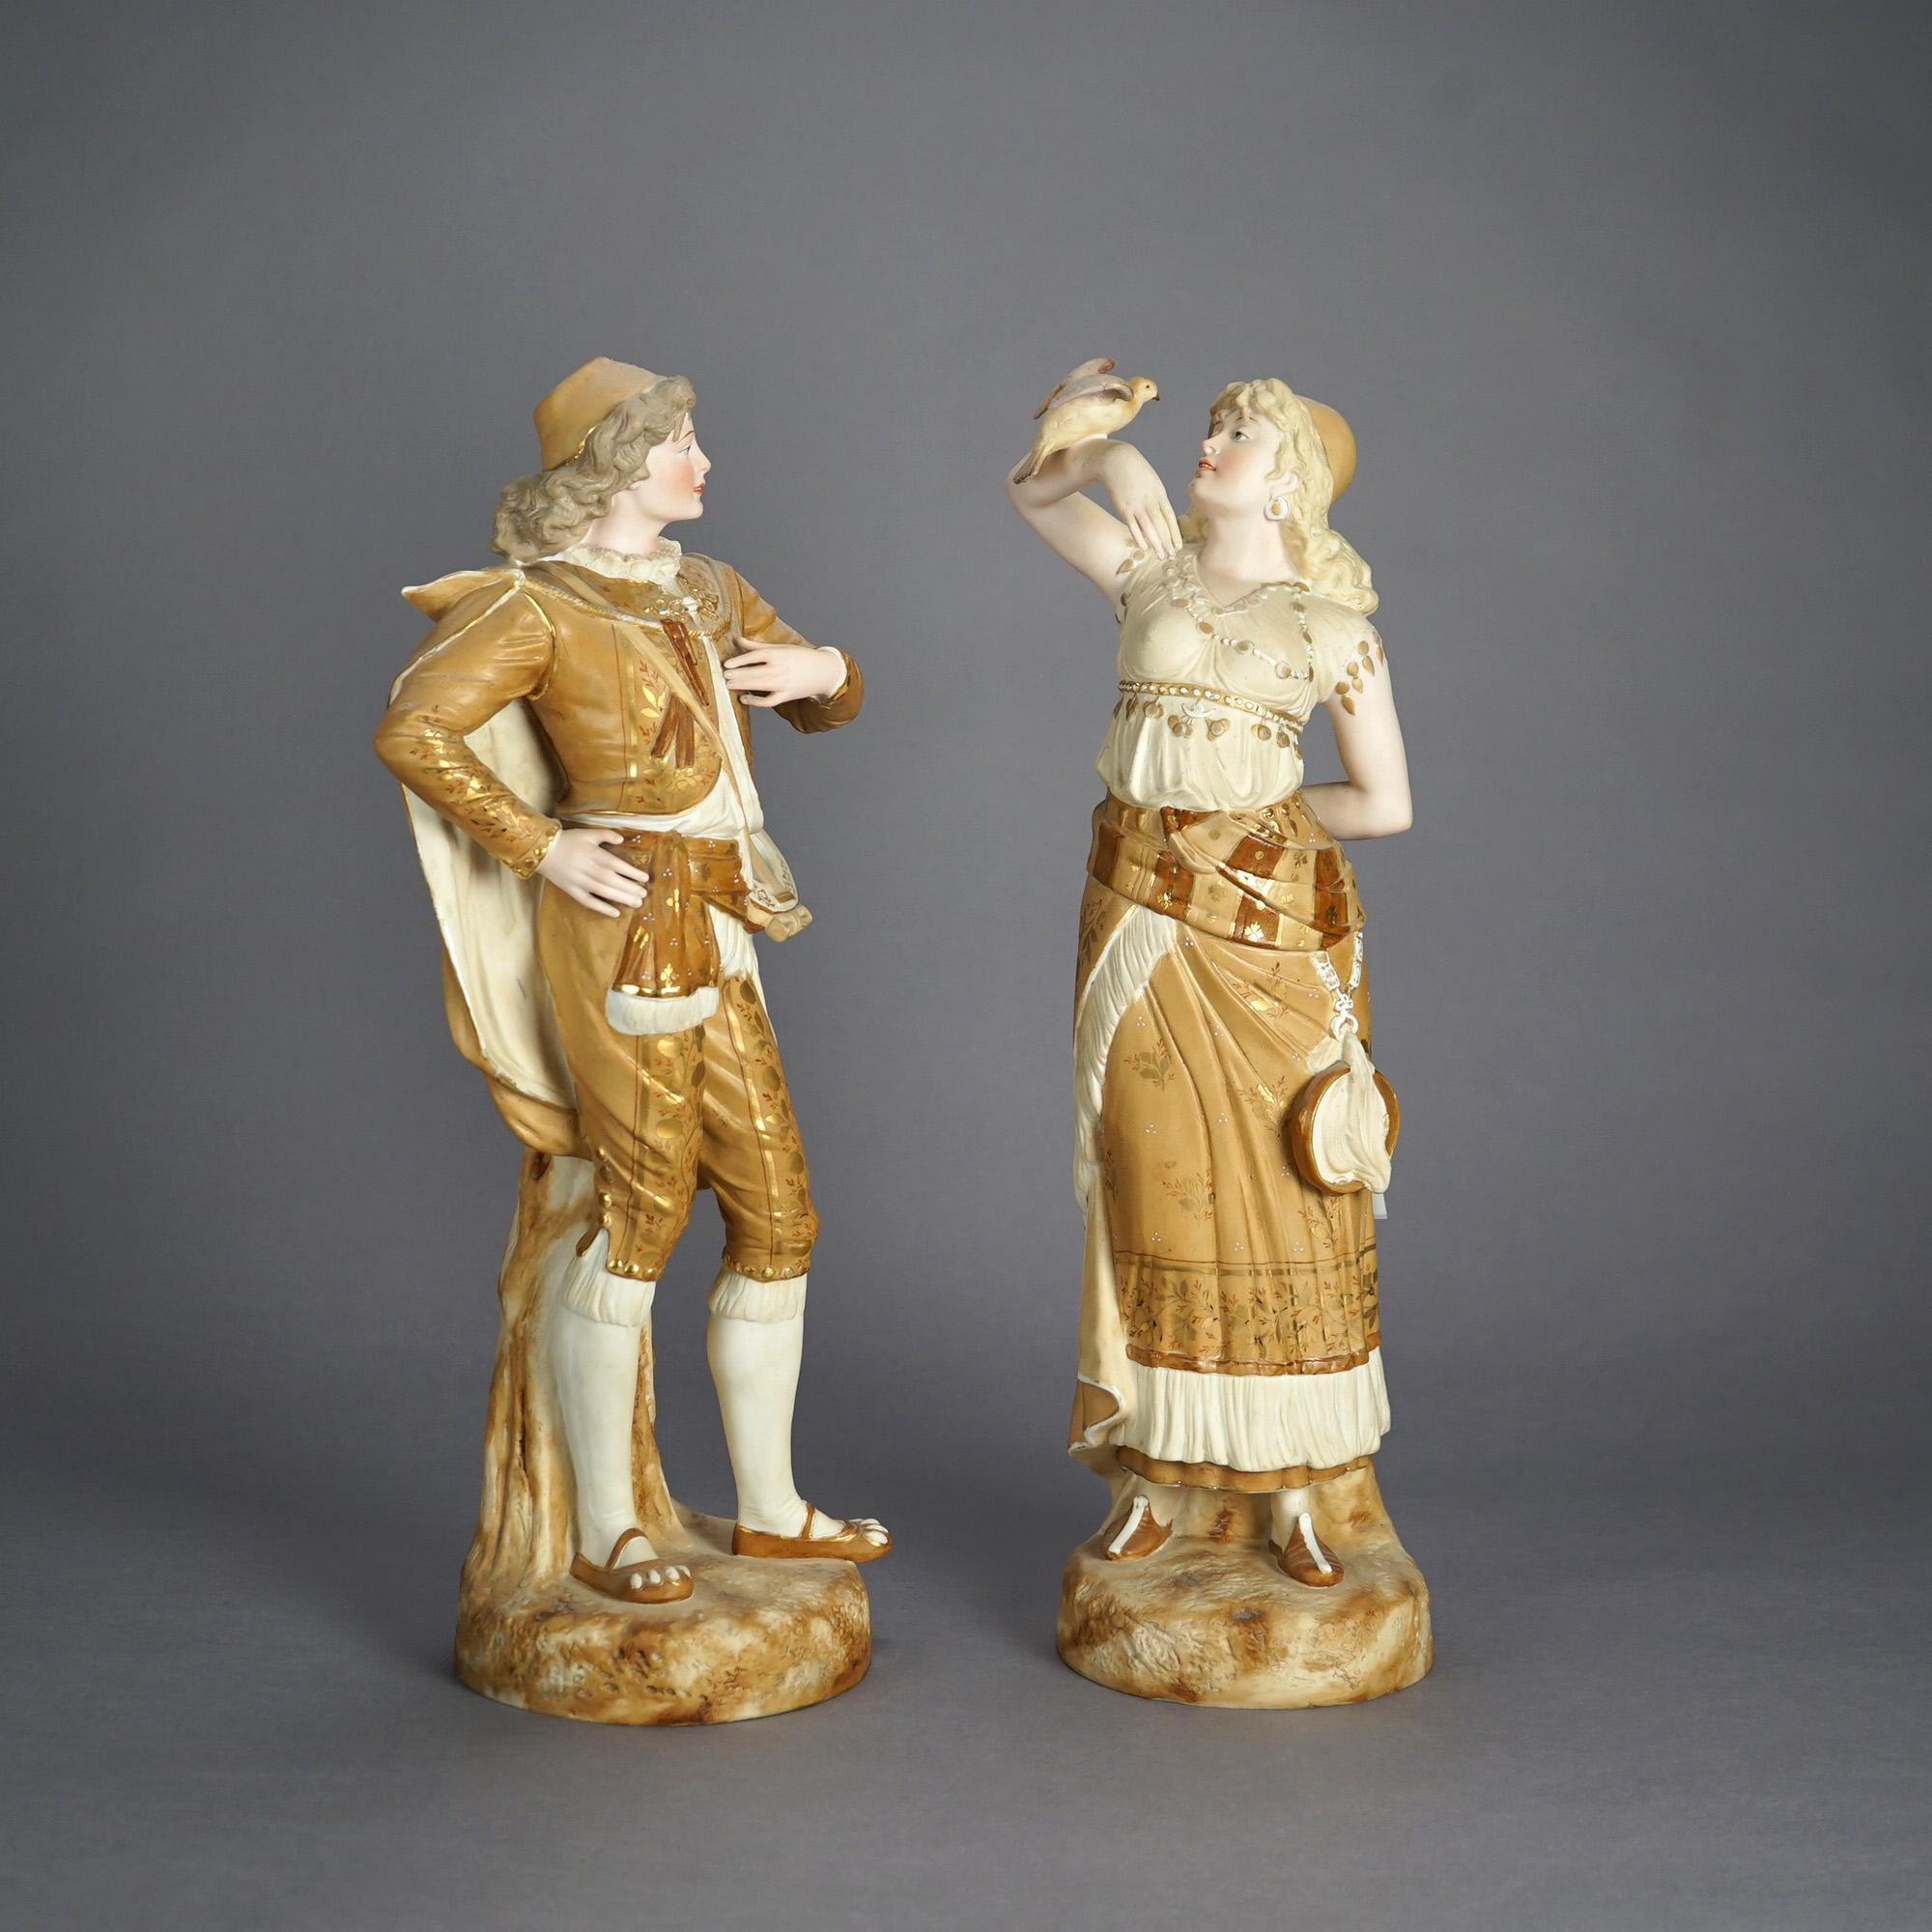 Antique Pair of Continental Porcelain Bisque Statues, Courting Couple, c1900

Measures - 19.5